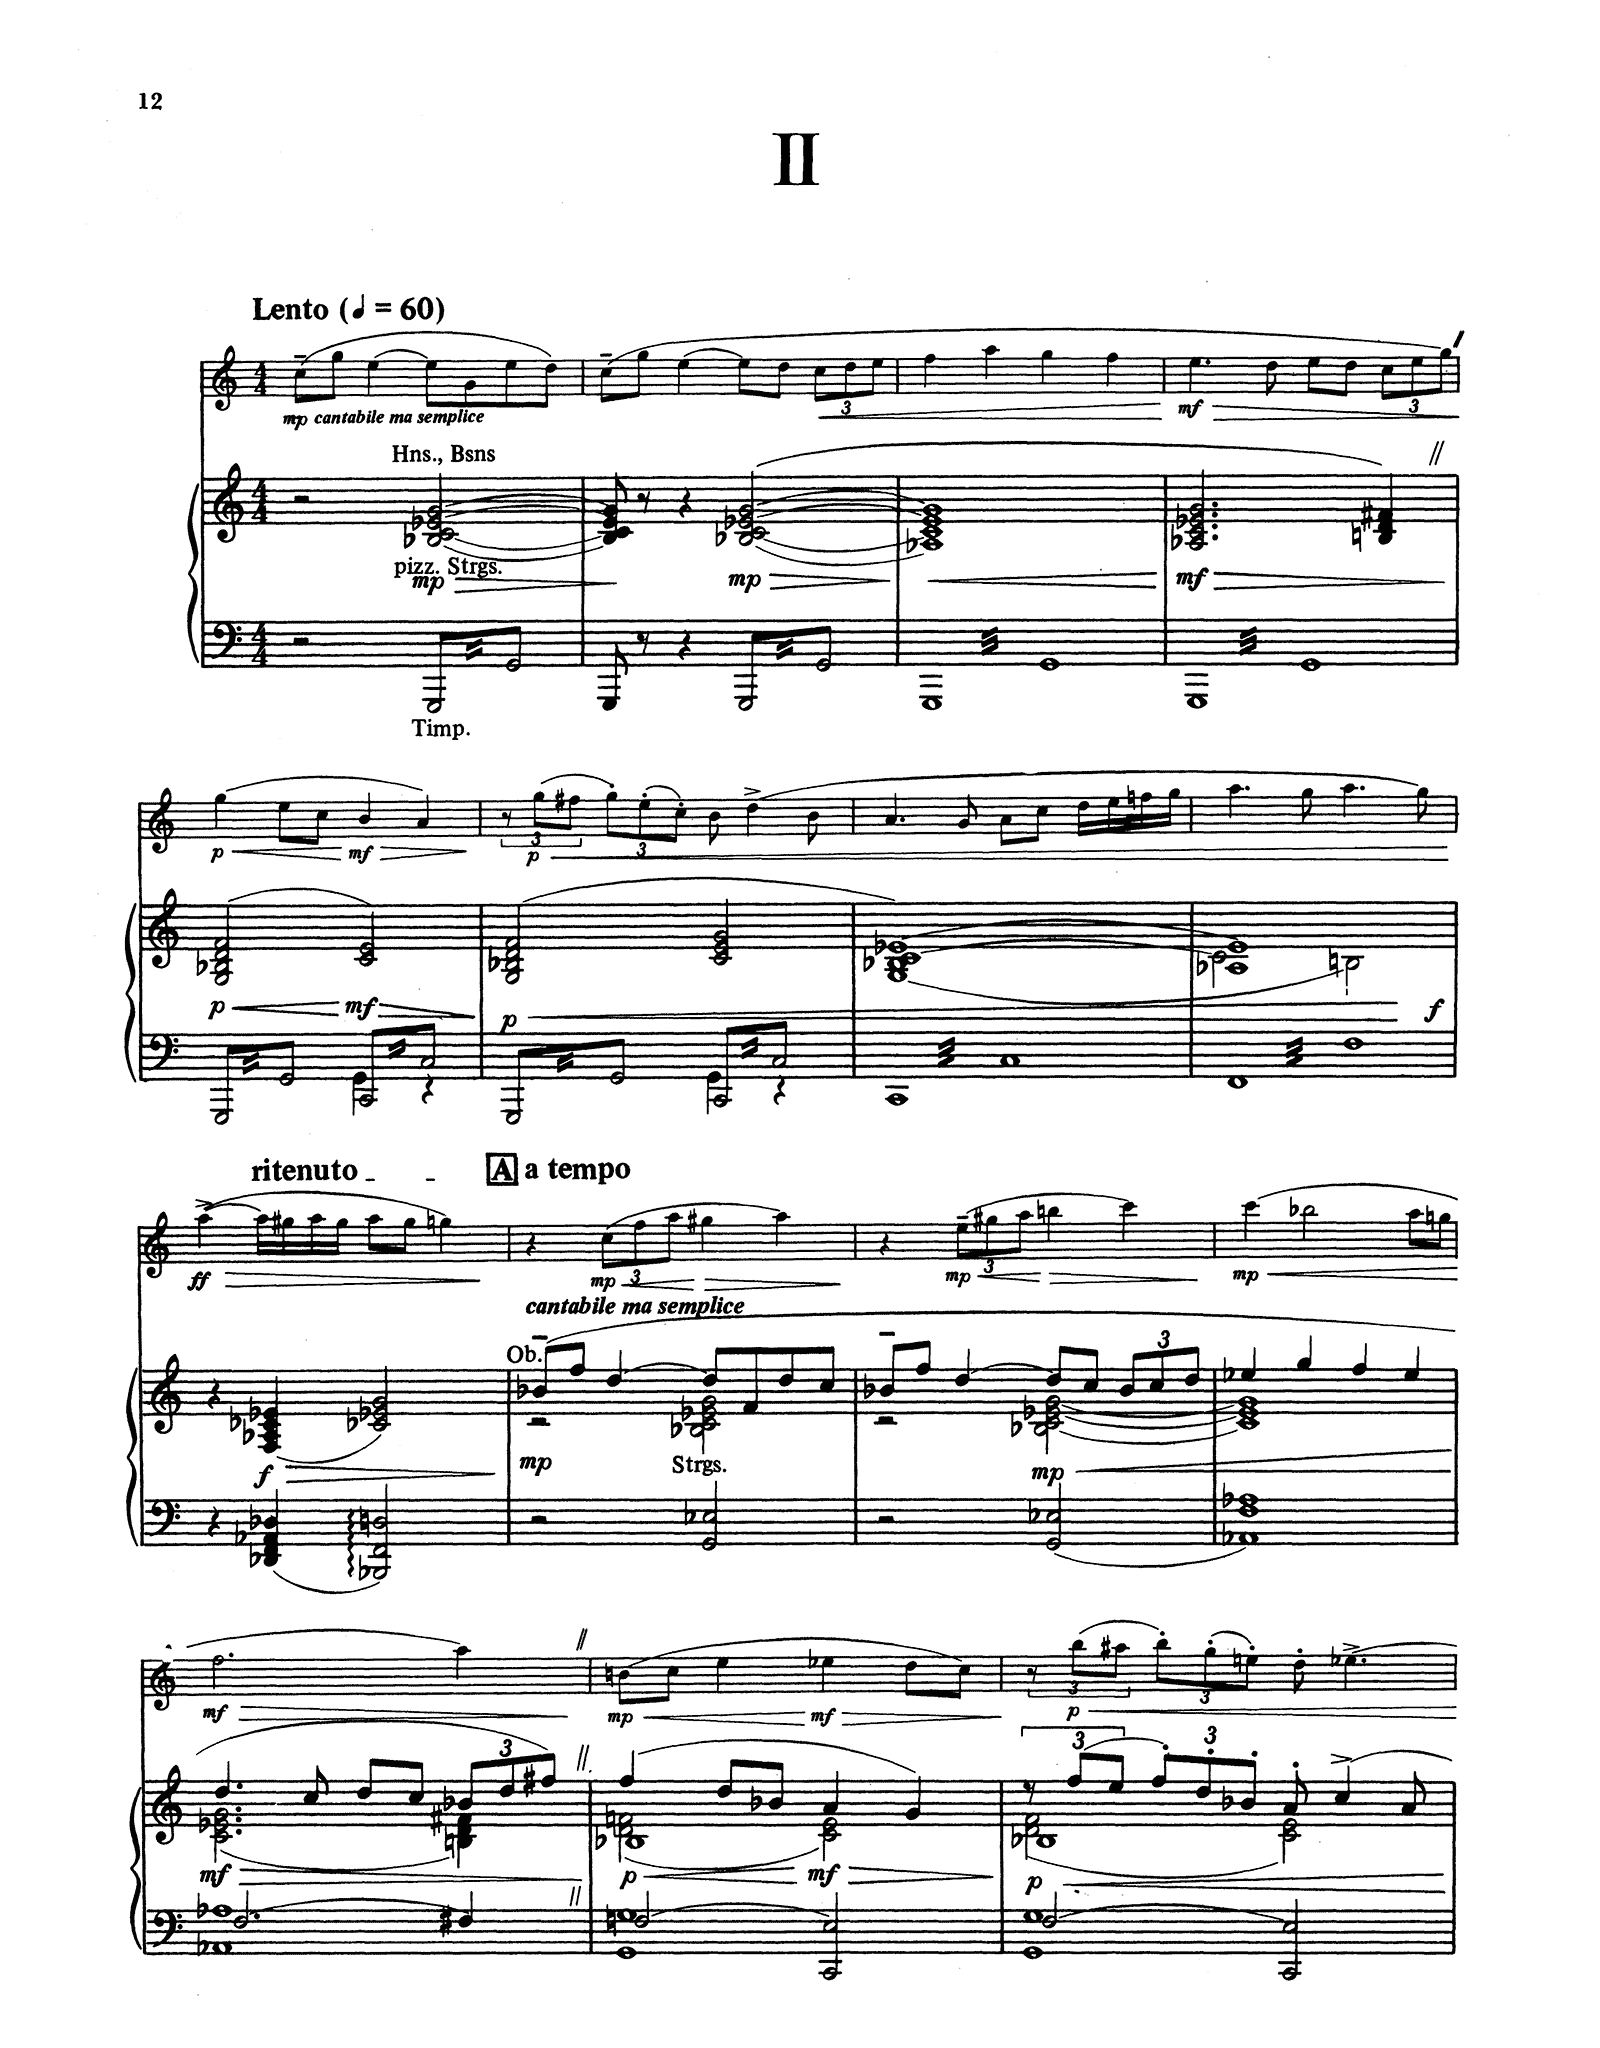 Arnold Clarinet Concerto No. 2, Op. 115 piano reduction - Movement 2